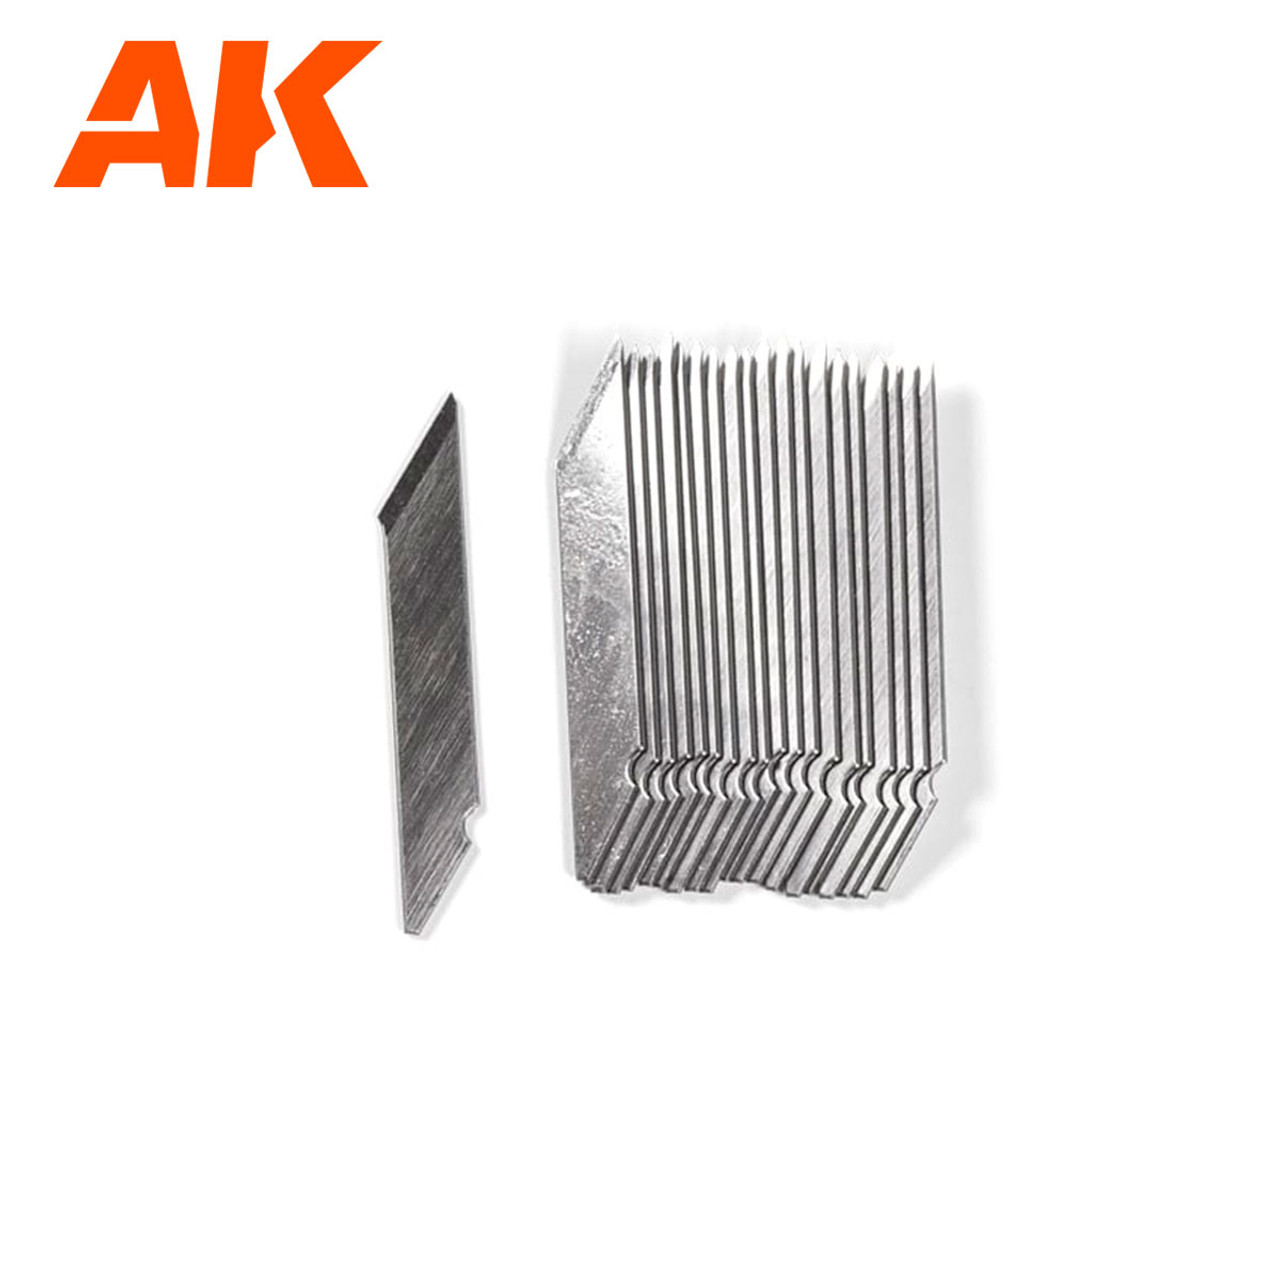 AK-Interactive: Precision Cutter 20 Spare Blades